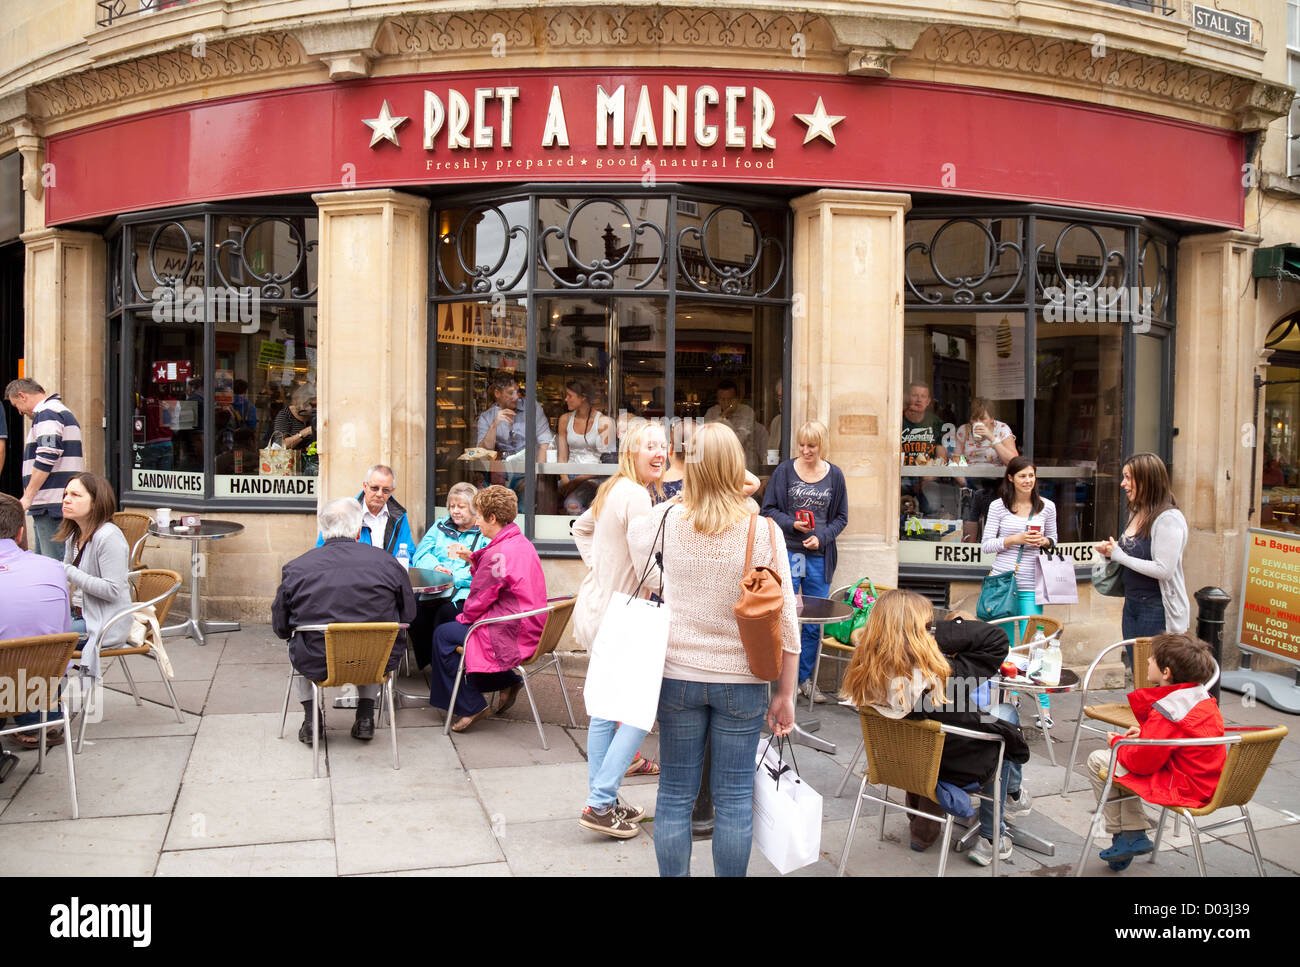 Pret a manger café restaurant exterior , Bath Somerset UK Banque D'Images